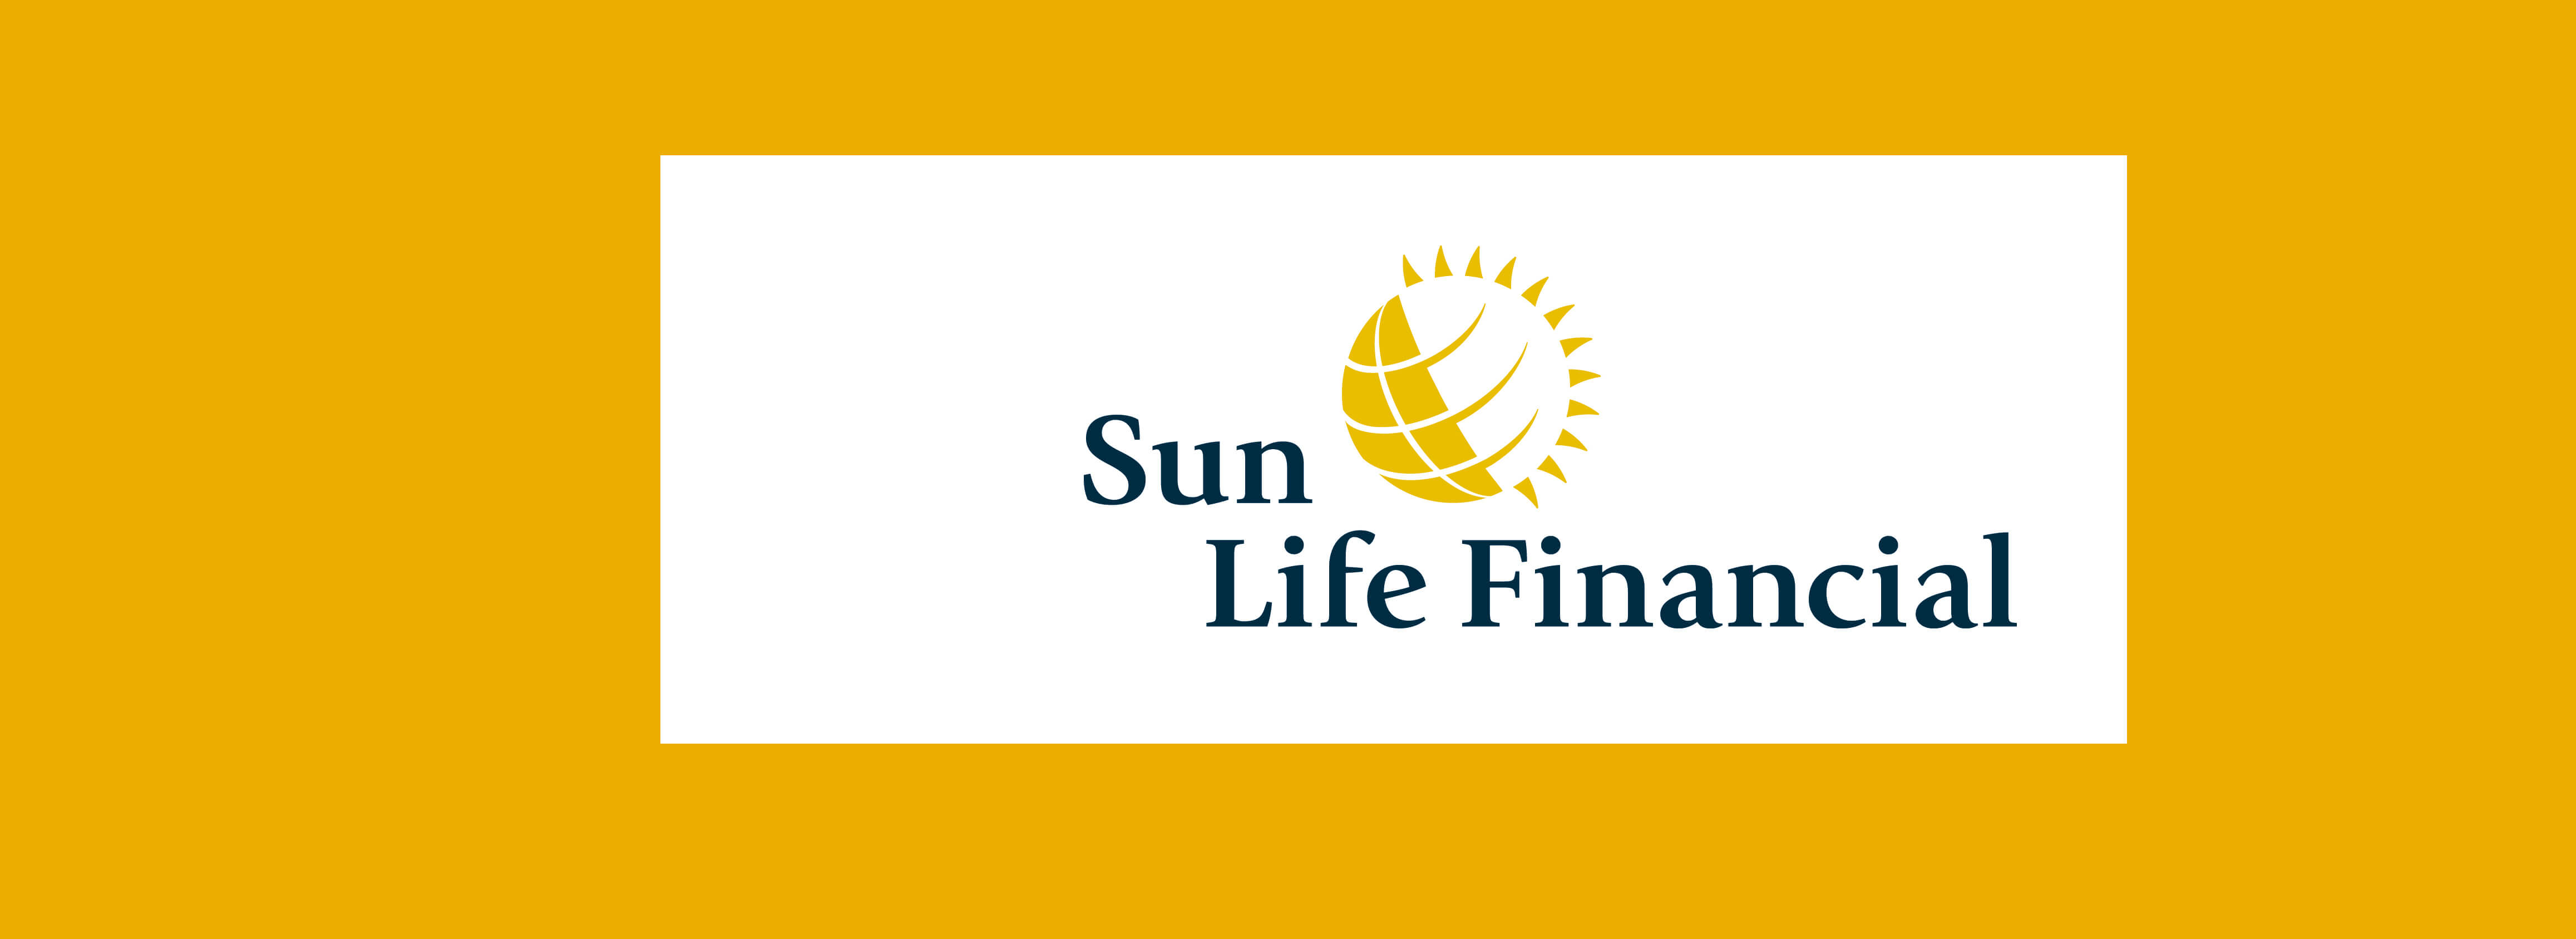 is sun life and minnesota life insurance the same thing